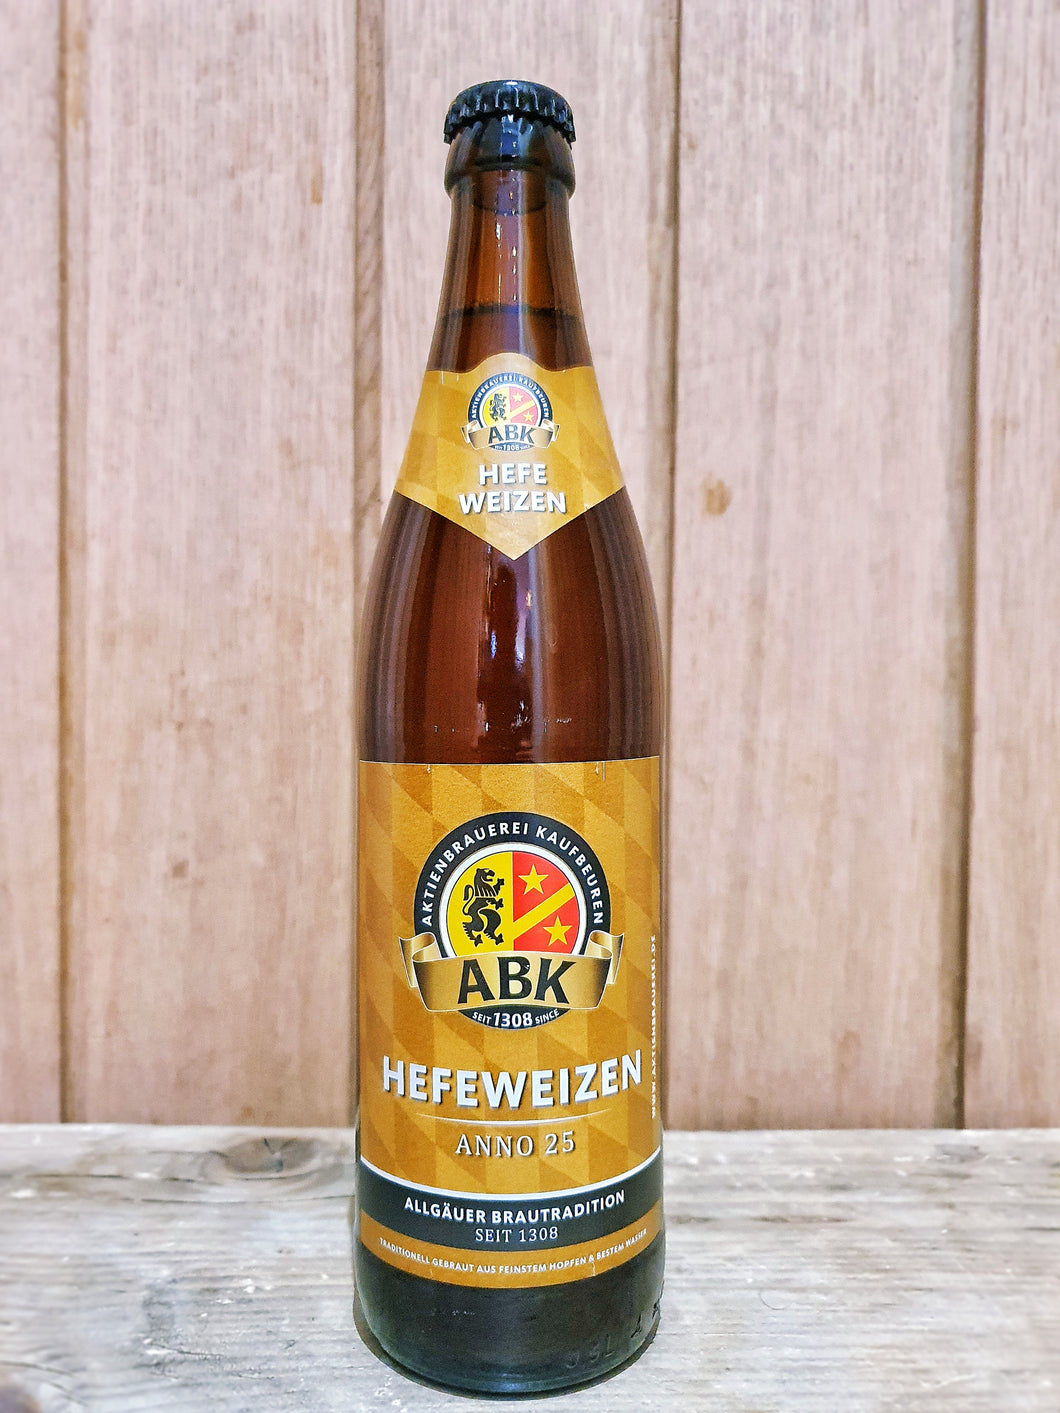 ABK - Hefeweizen/Wheat Beer